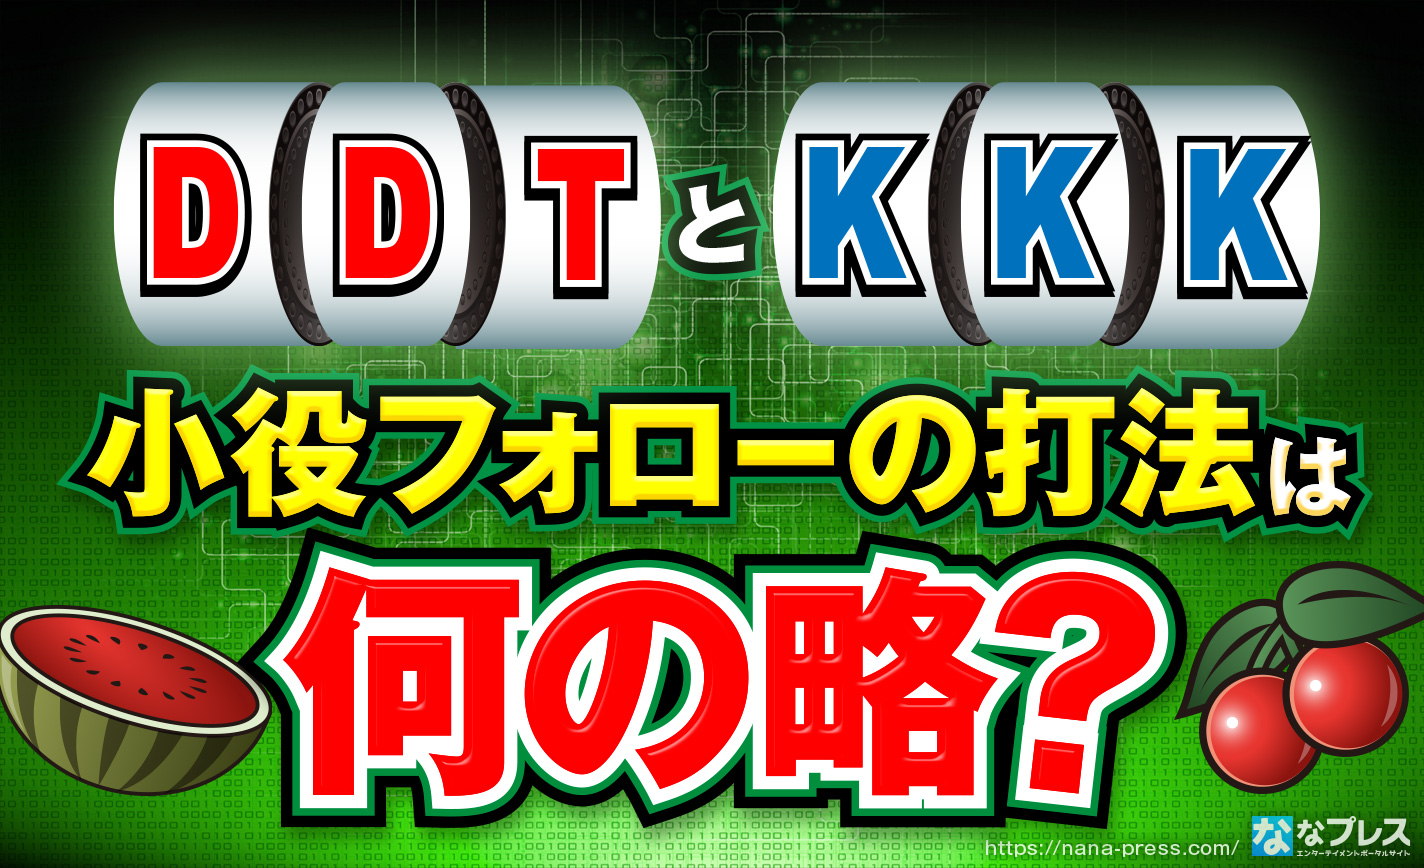 【DDTとKKK】パチスロ雑誌で使われてた小役フォローの打法は何の略か知っているか！